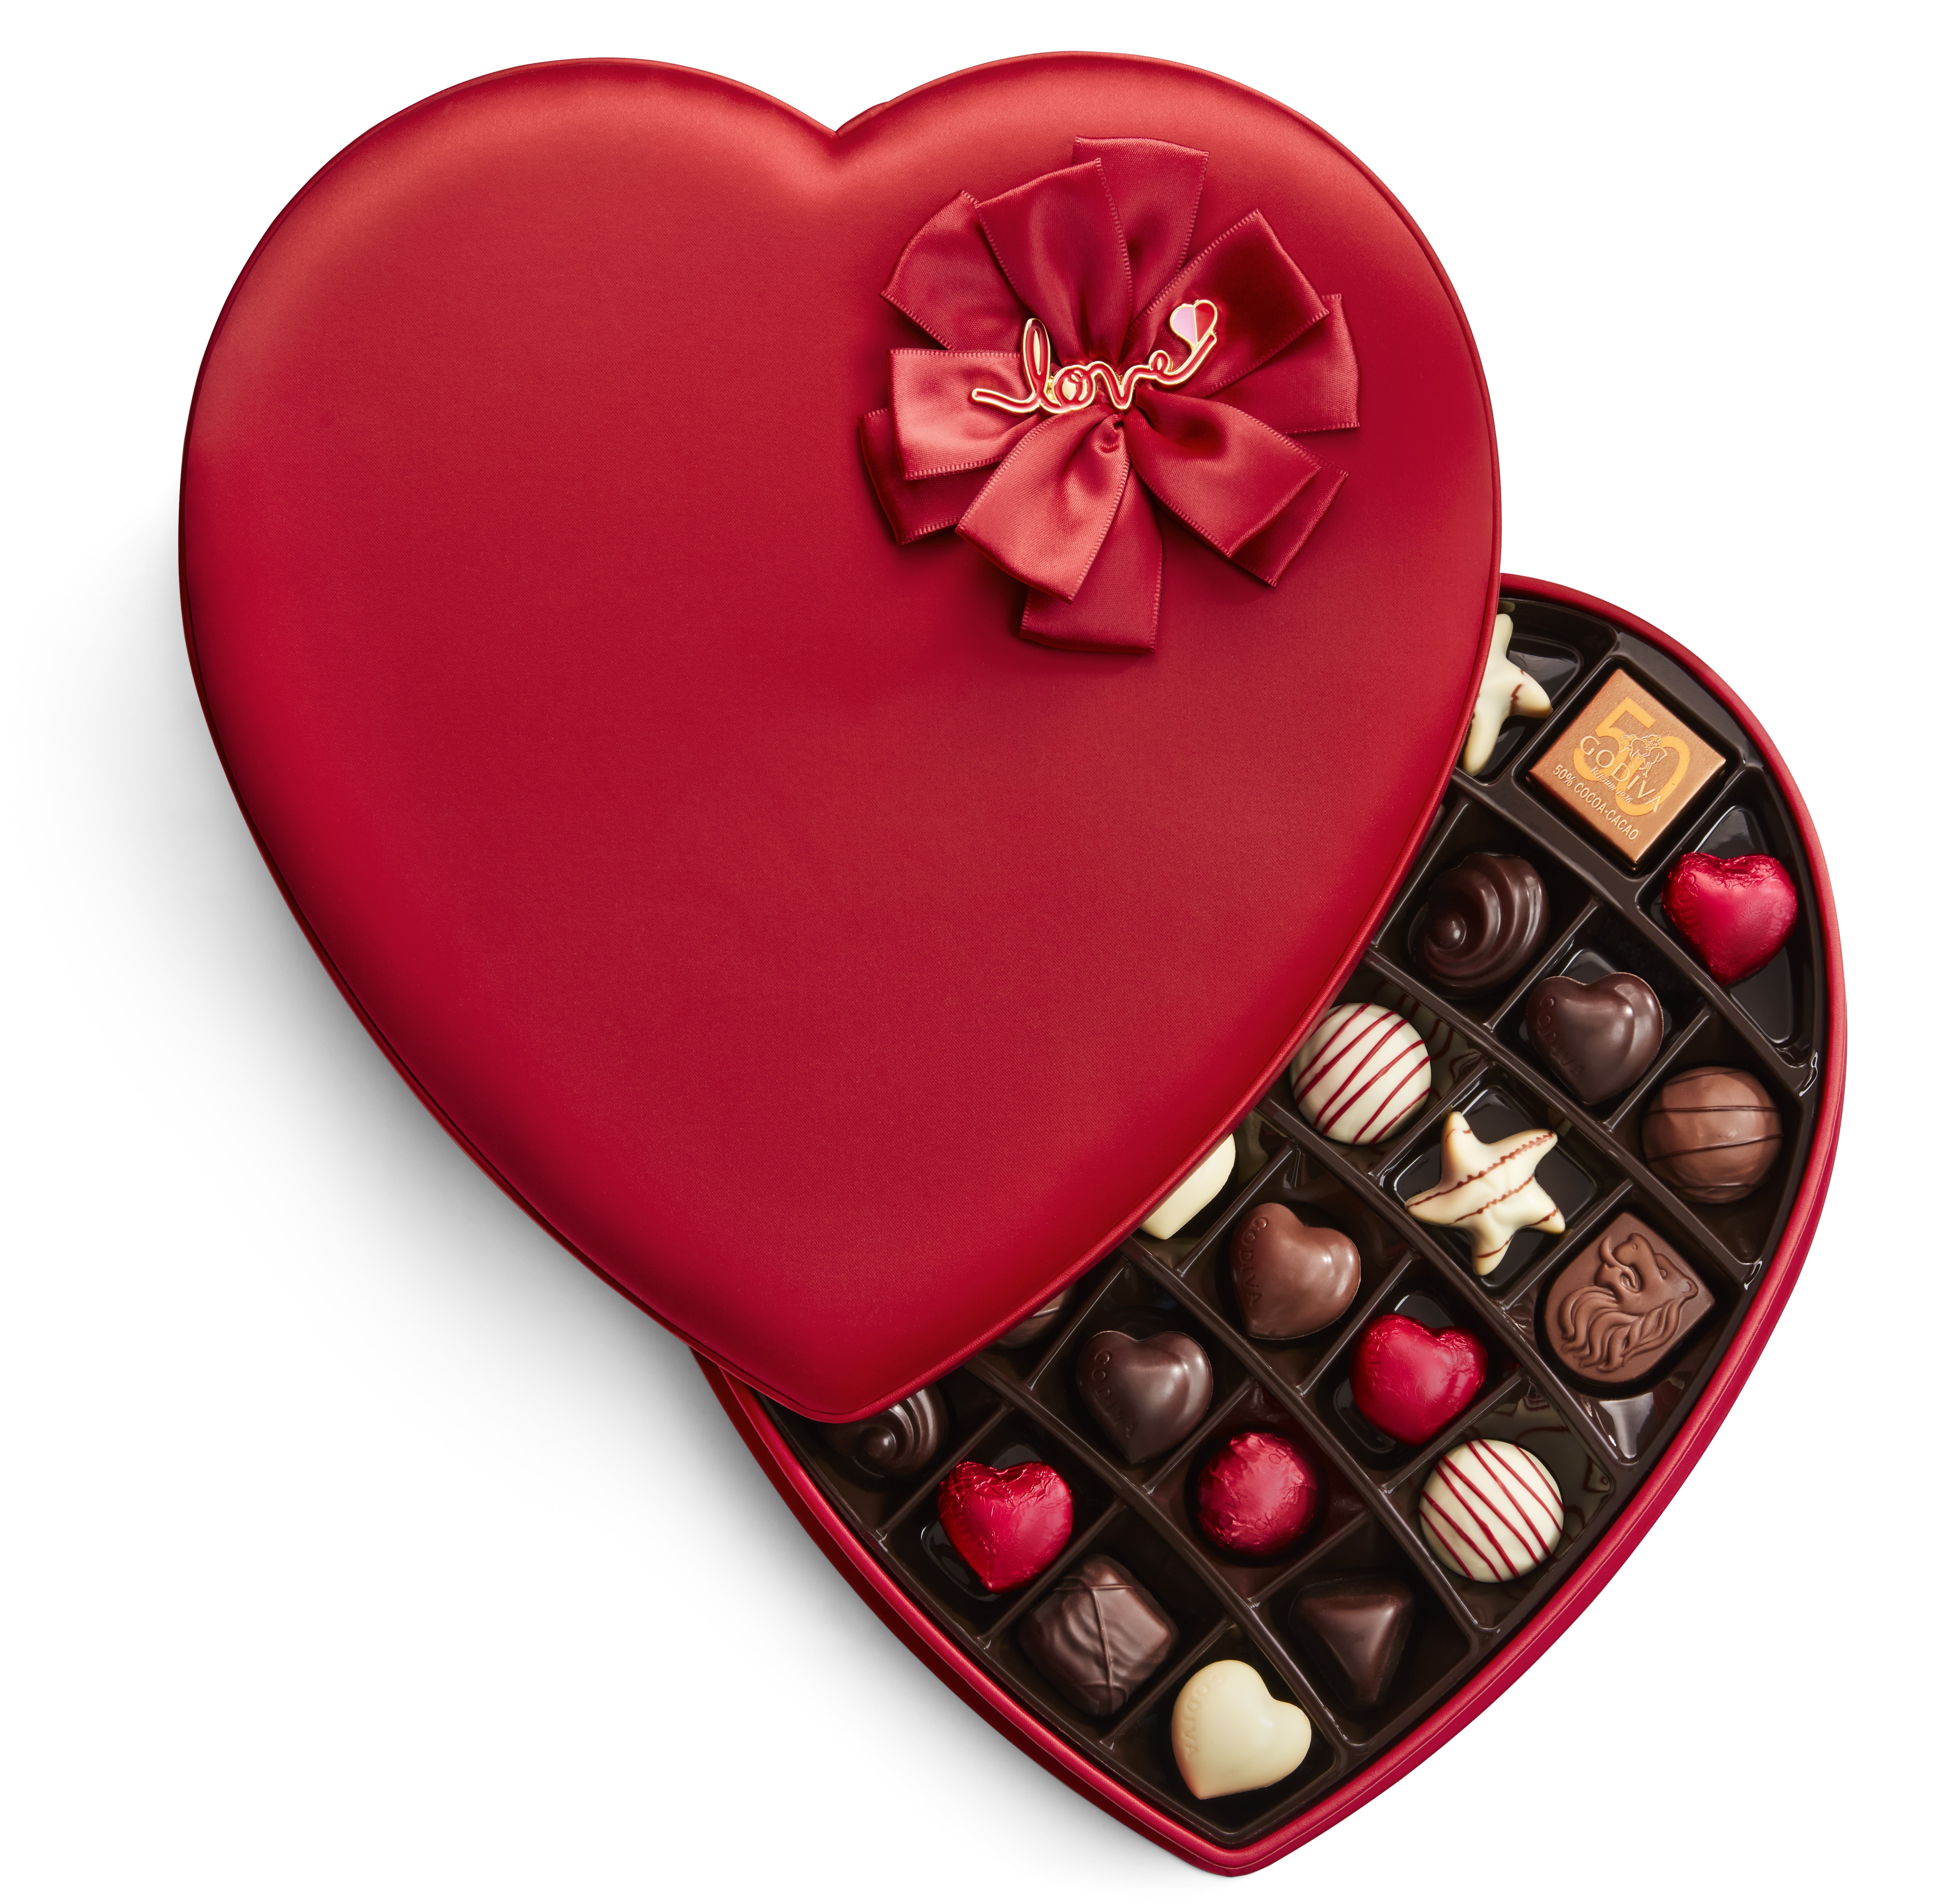 I Love You Jon Mini Heart Tin Gift For I Heart Jon With Chocolates or Mints 